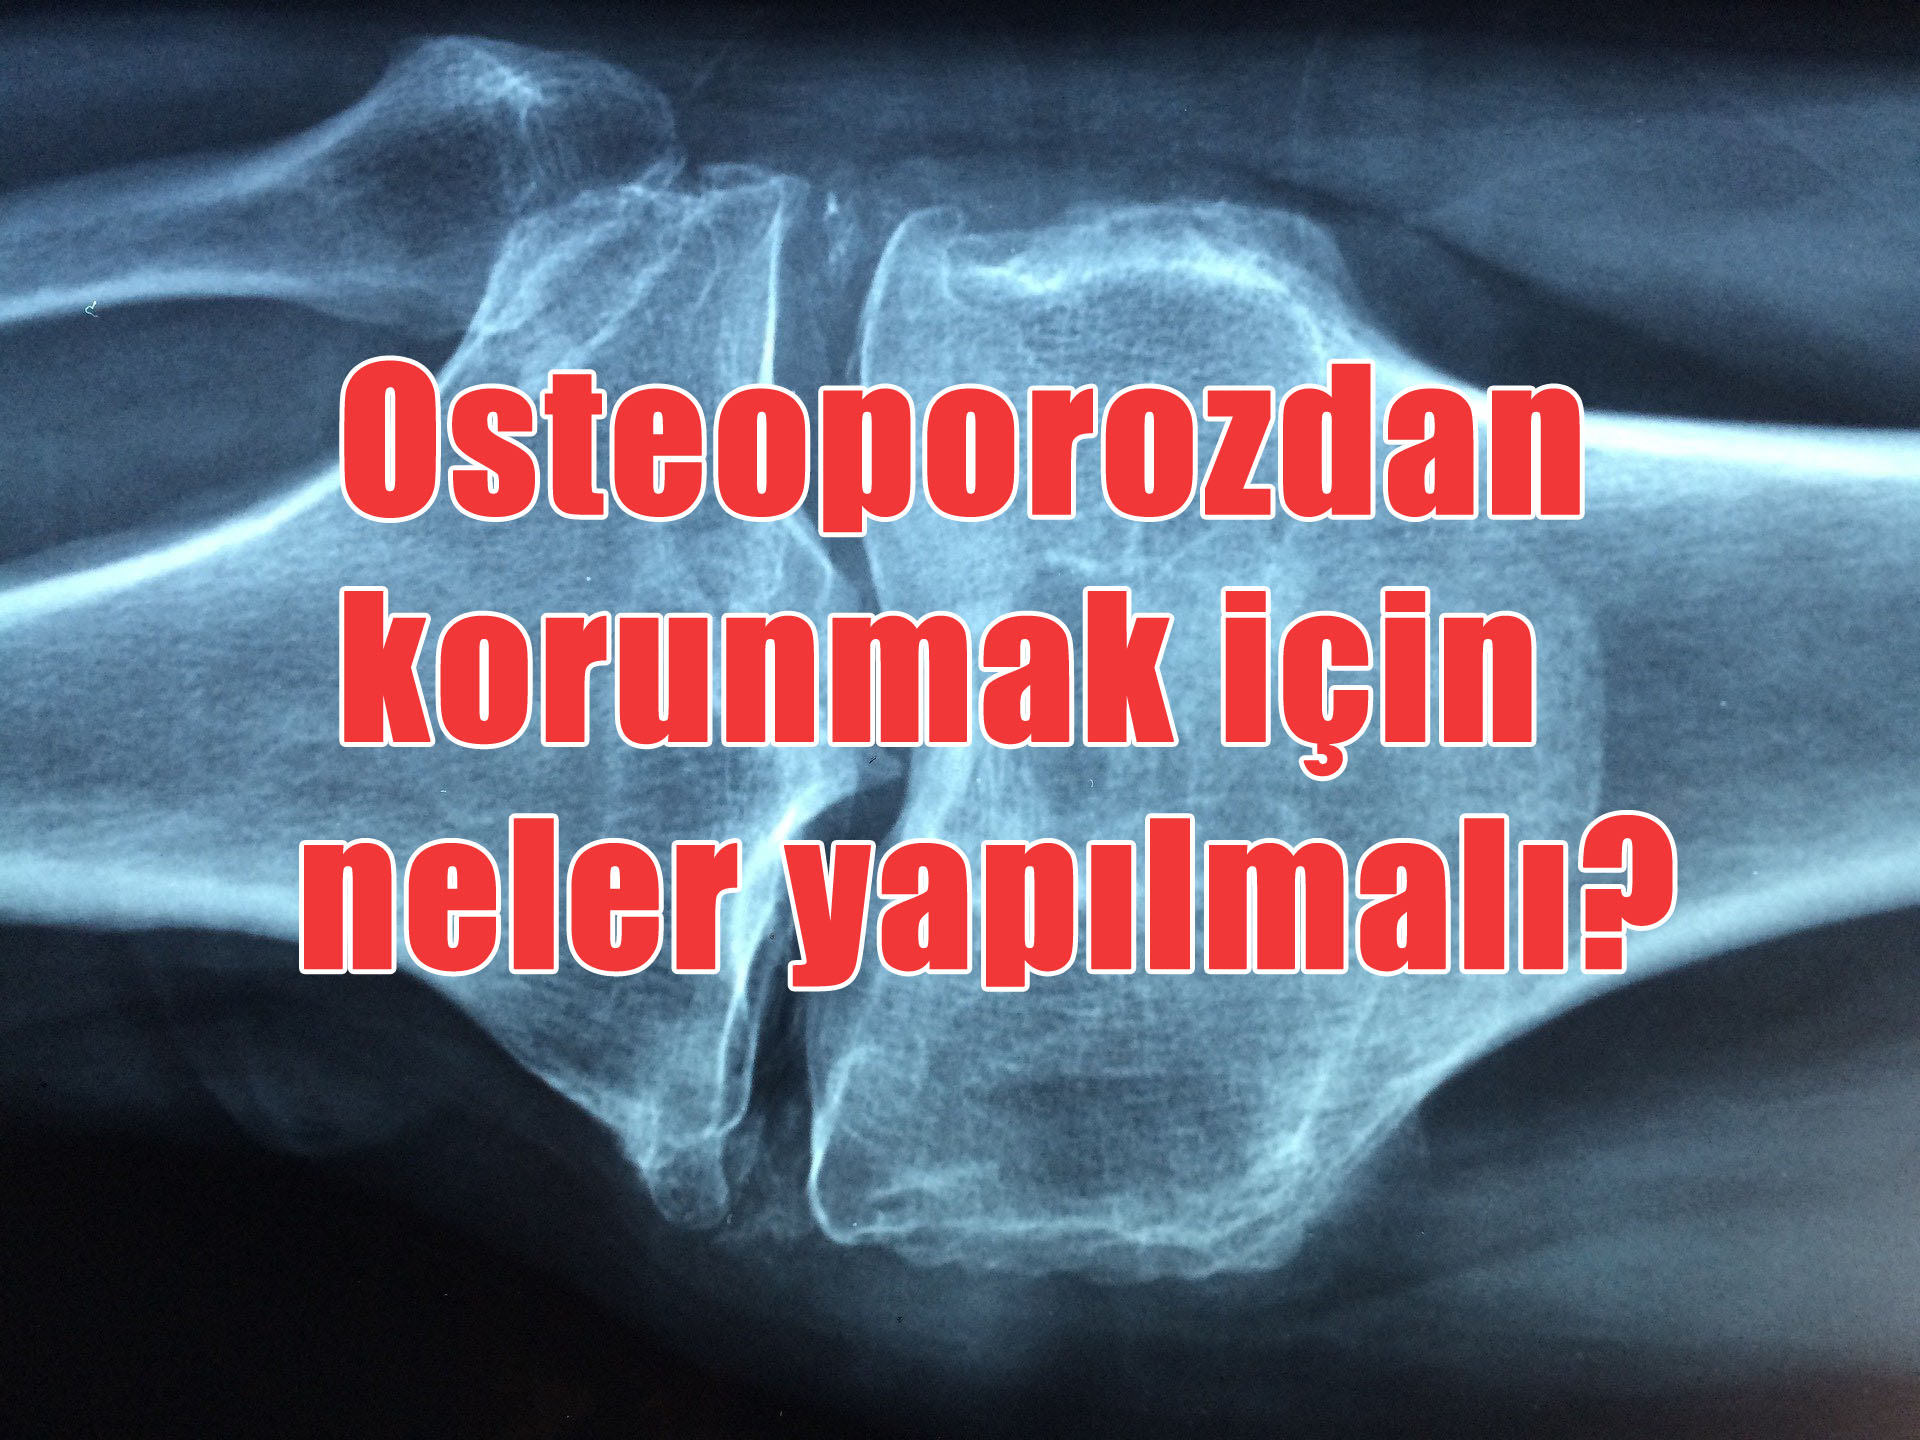 Osteoporozdan